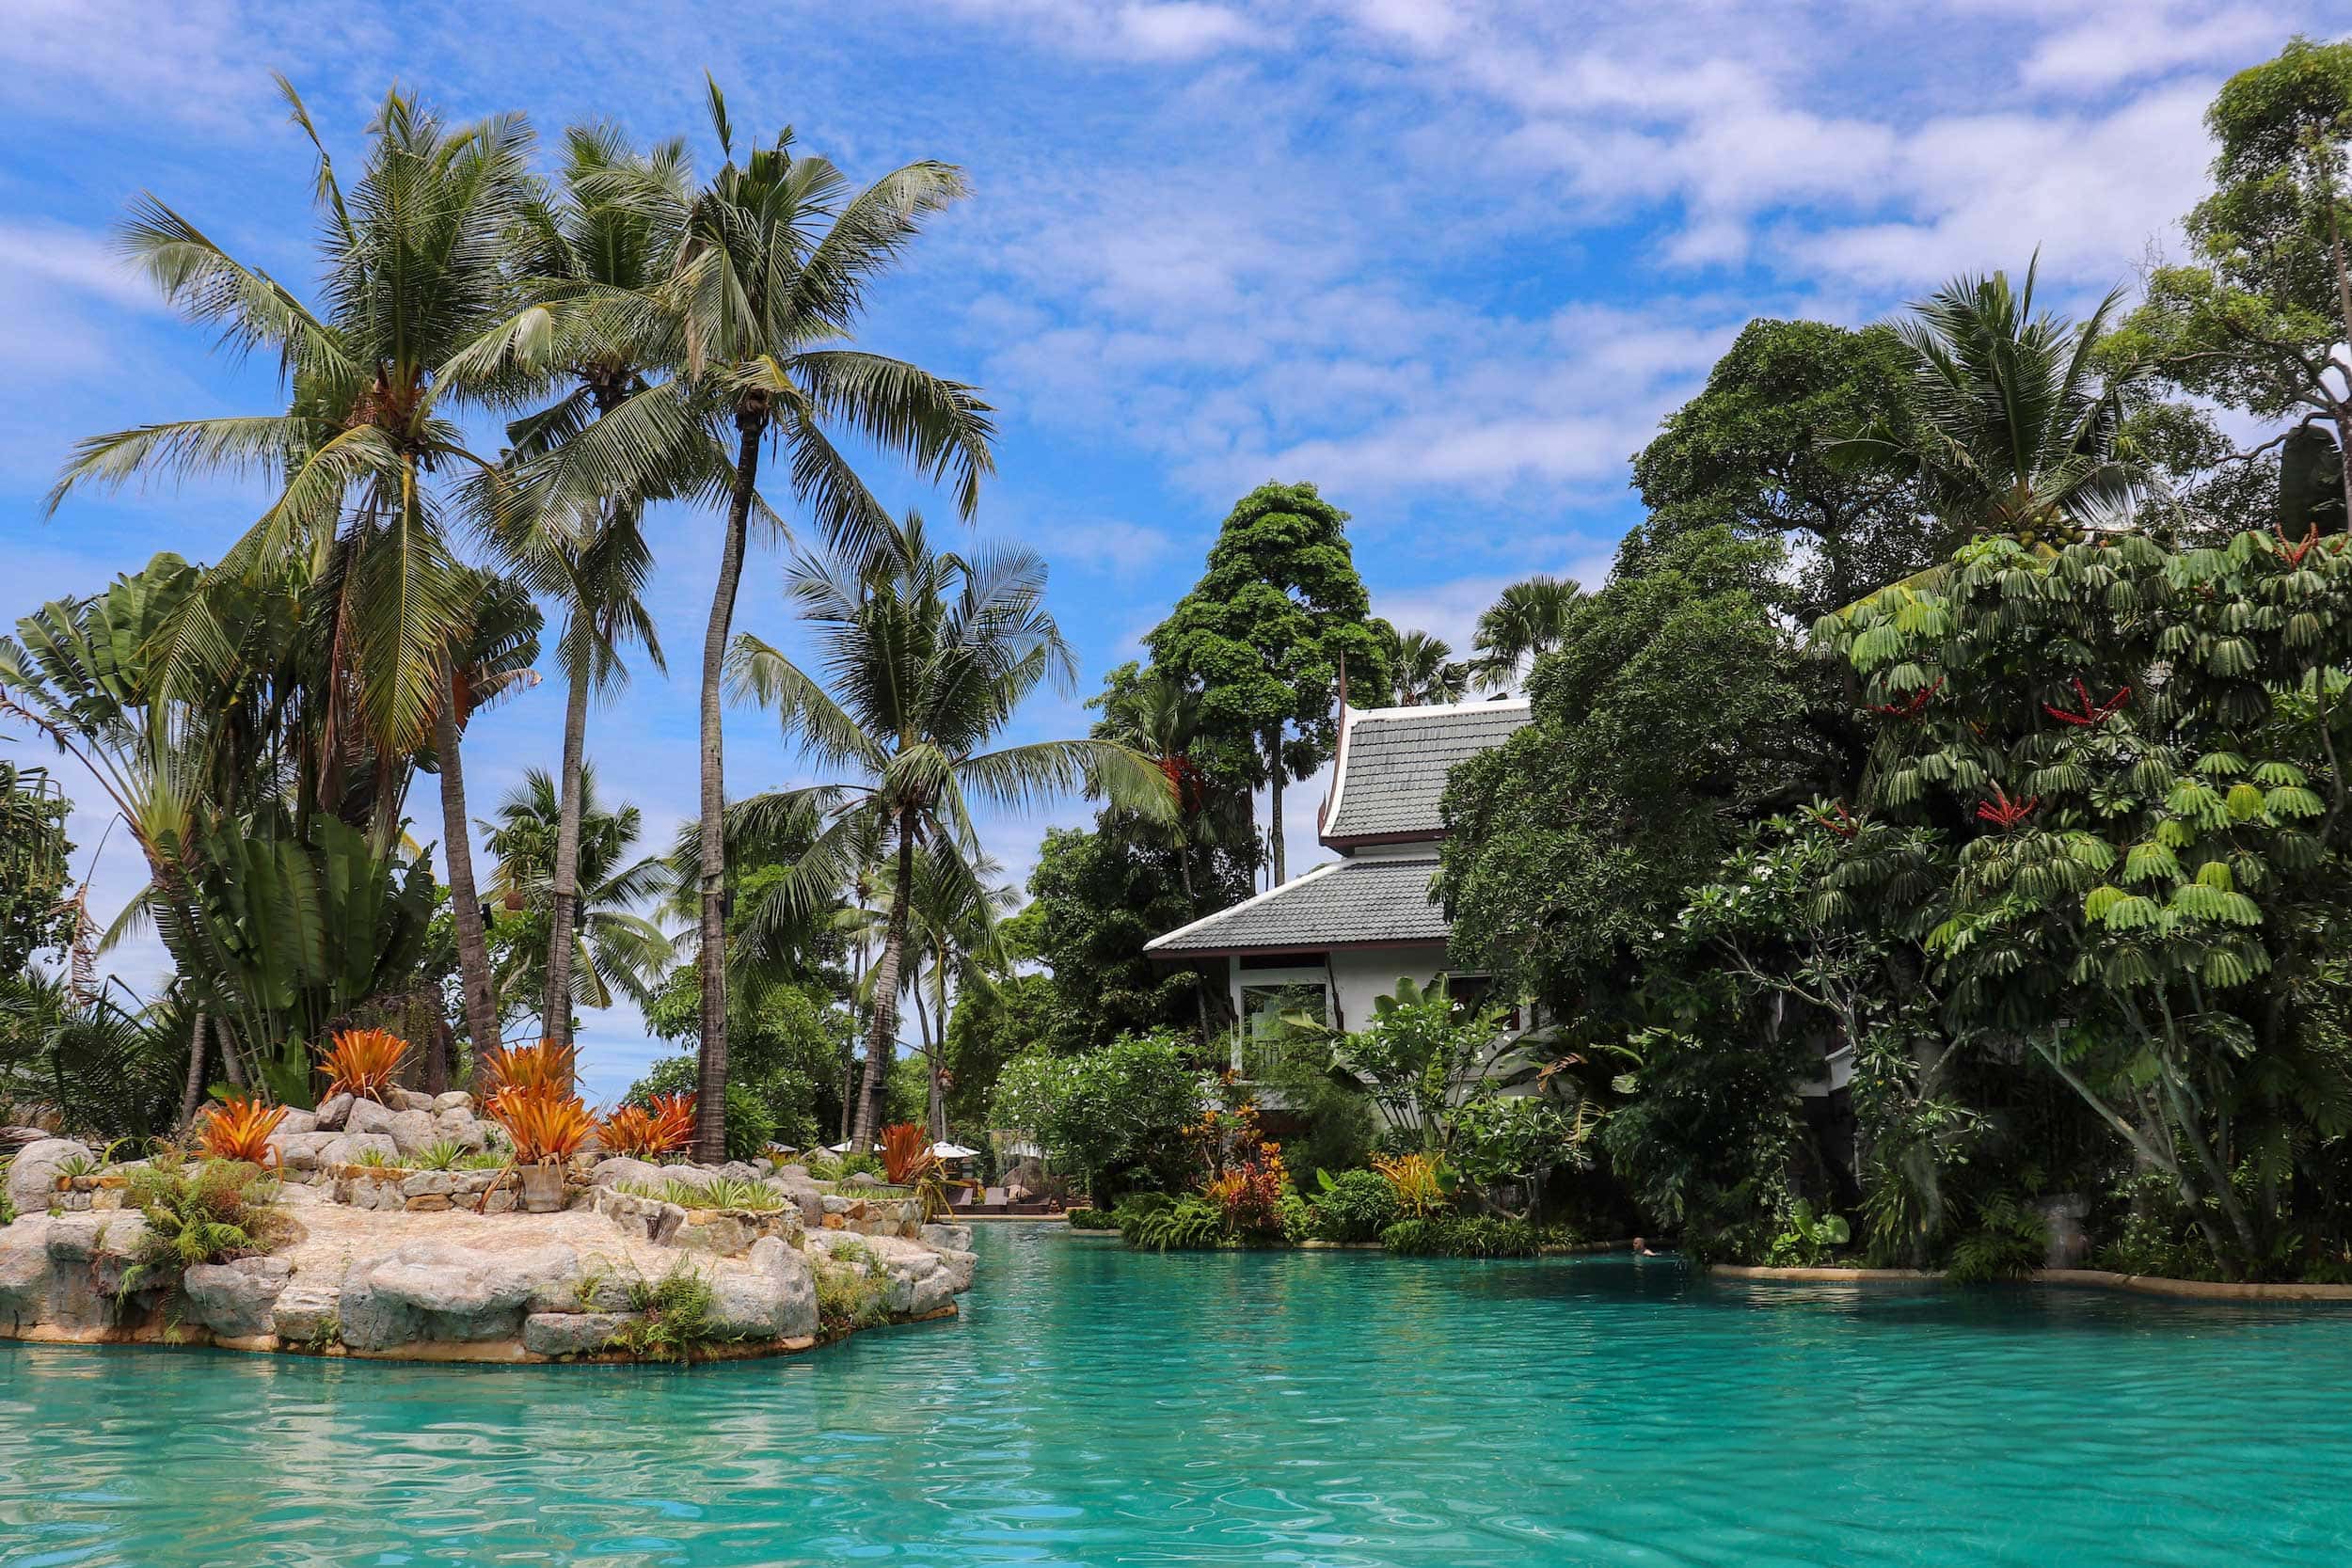 Best Phuket Resort For Couples? Review of Thavorn Beach Village Resort & Spa